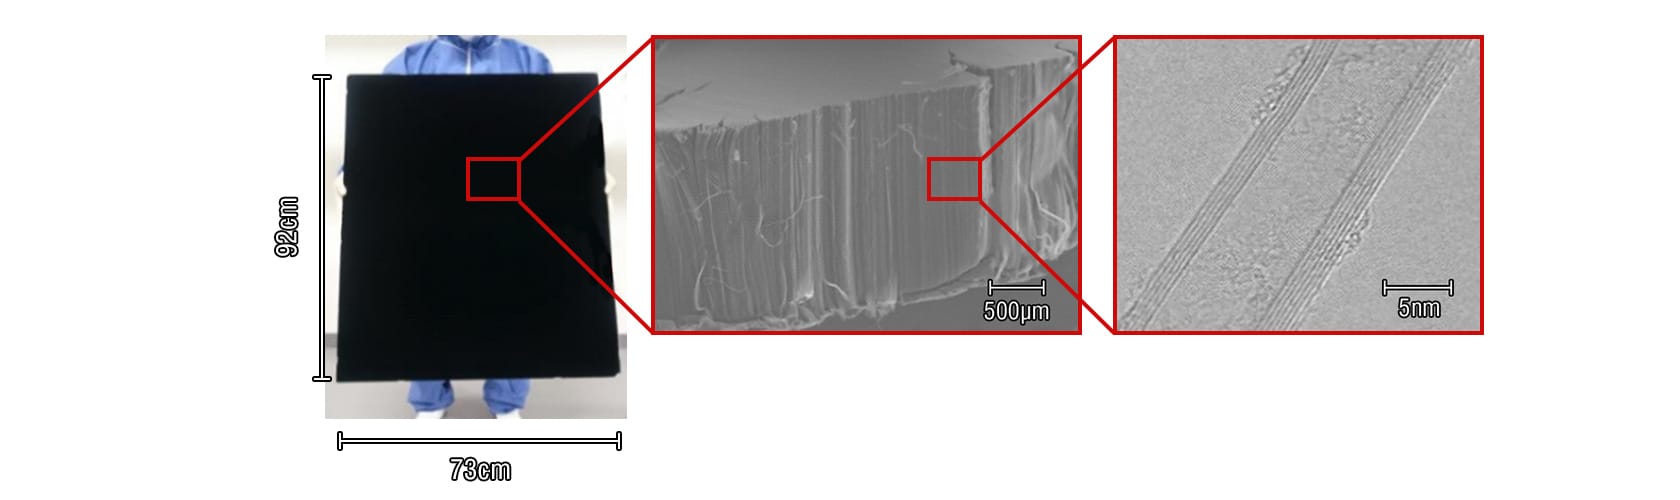 Large surface area base board and Carbon Nano Tube microscope photograph